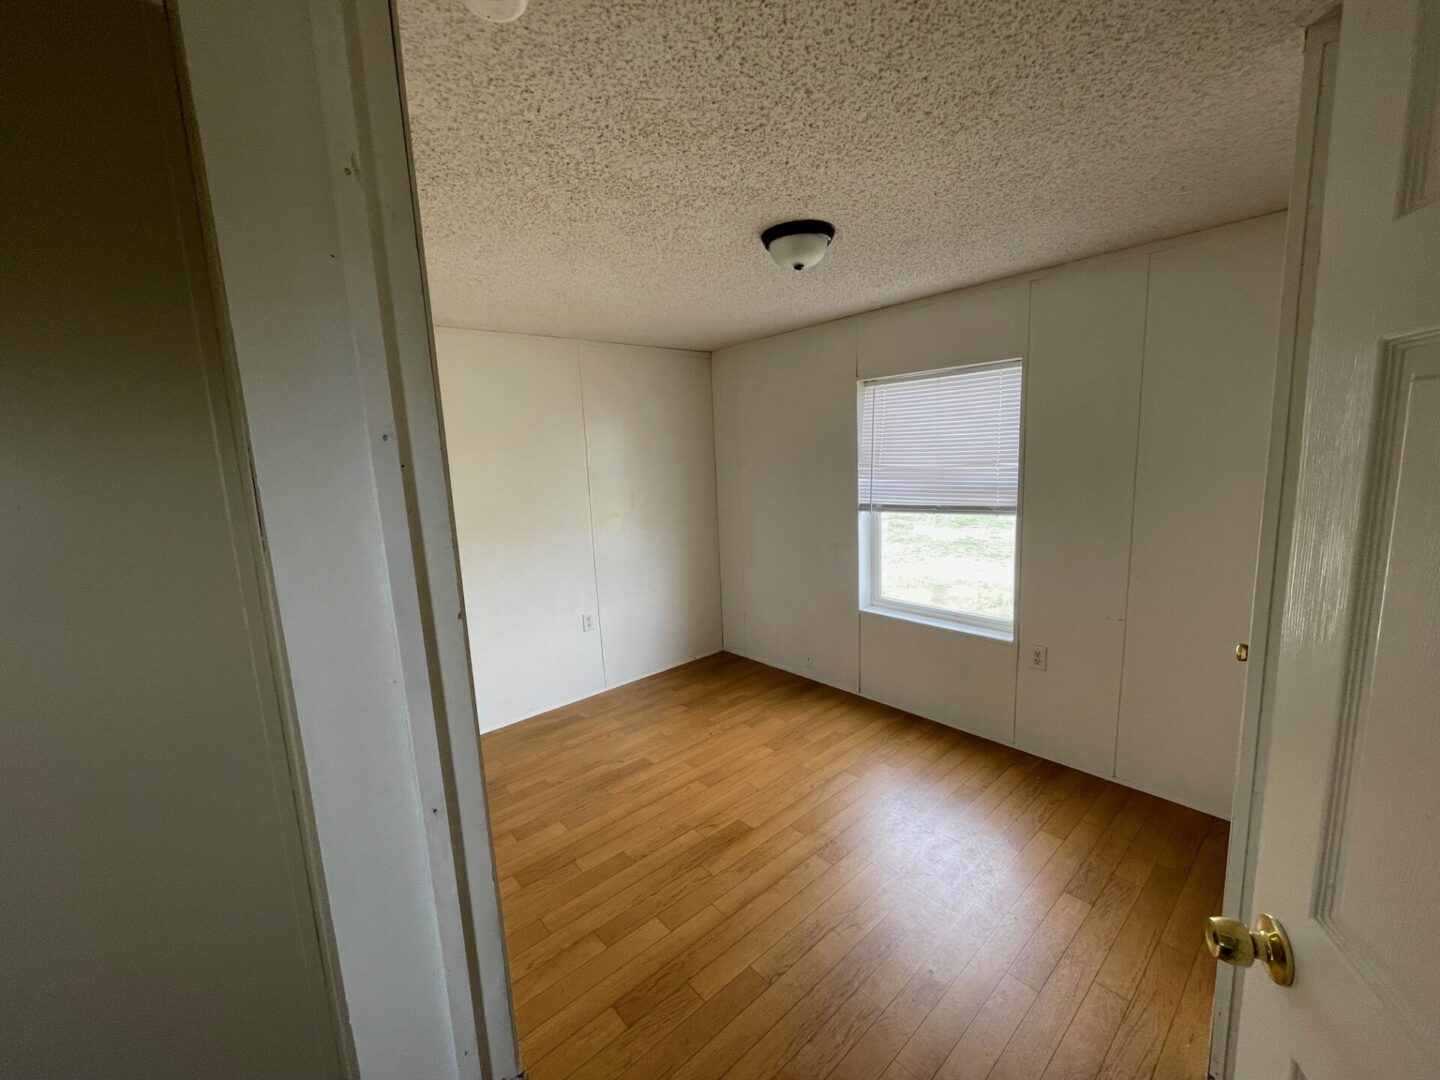 Empty room with wood floor and window.